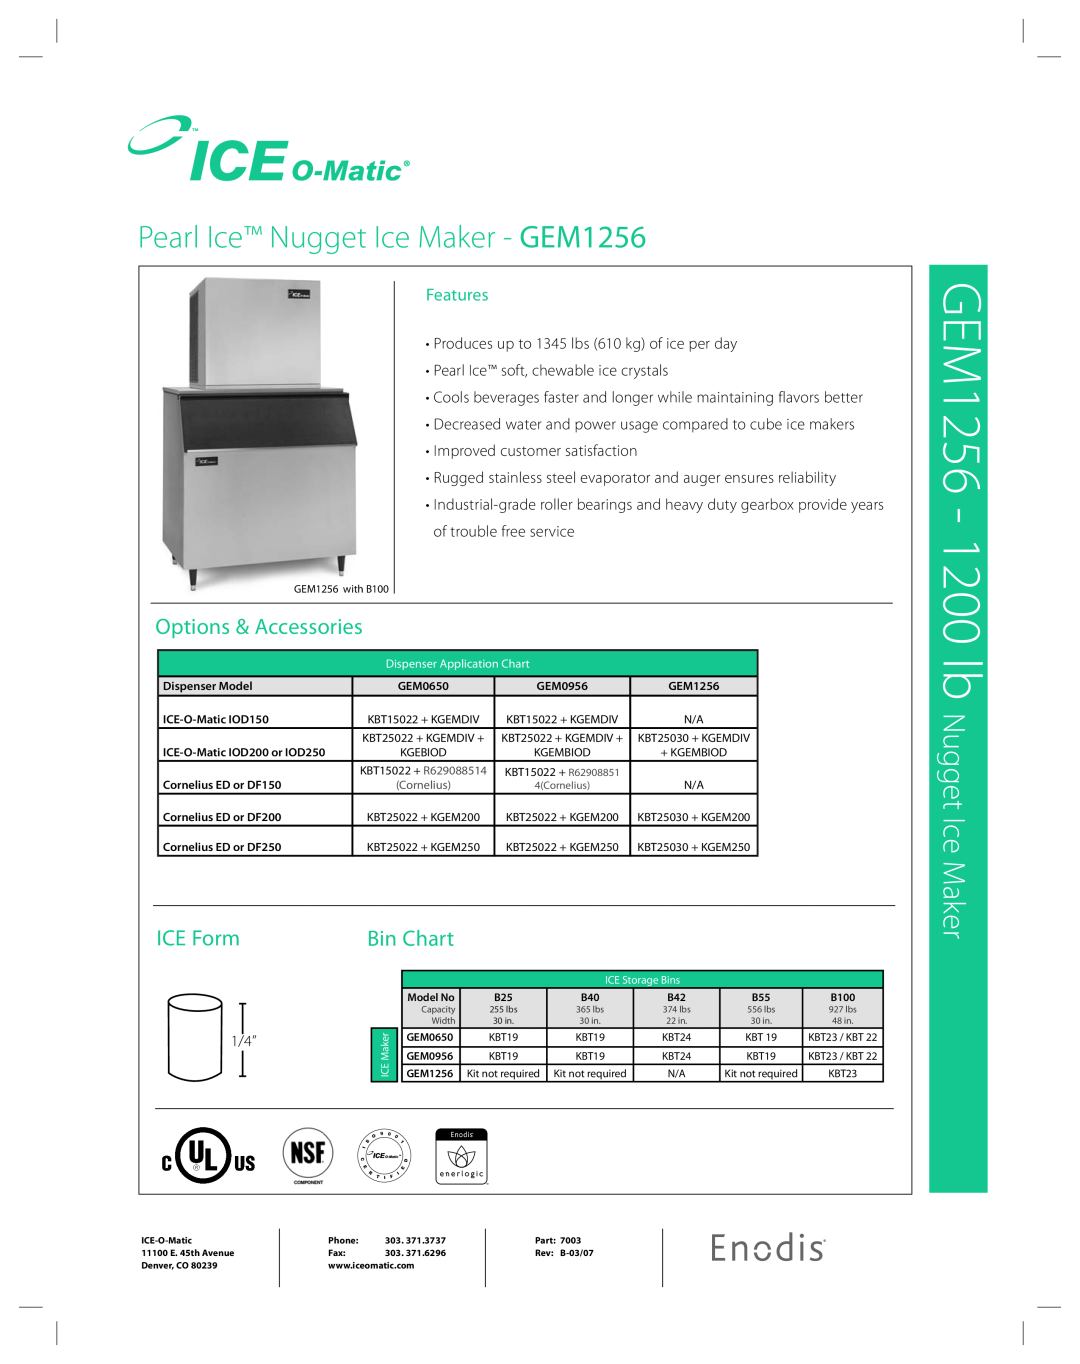 Ice-O-Matic GEM 1256 manual Features, GEM1256 - 1200 lb Nugget Ice Maker, Pearl Ice Nugget Ice Maker - GEM1256, ICE Form 